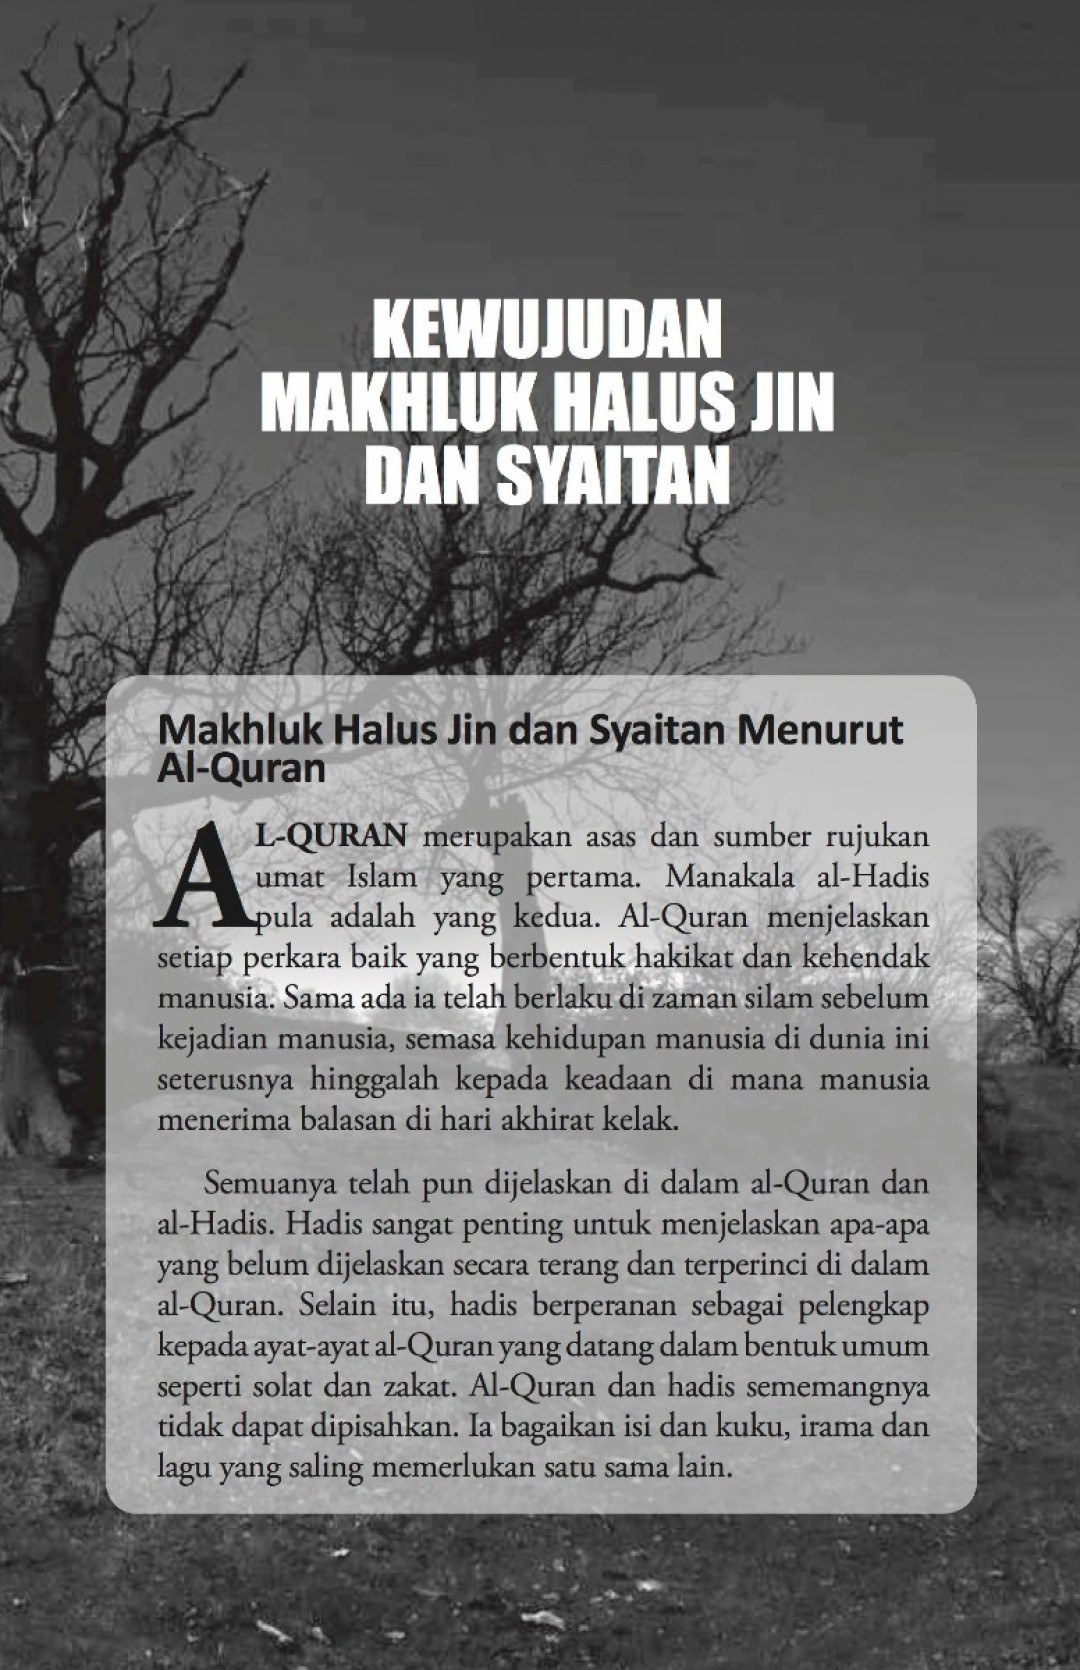 Kewujudan Makhluk Halus Jin & Syaitan - Ustaz Dato' Shamsuri sha